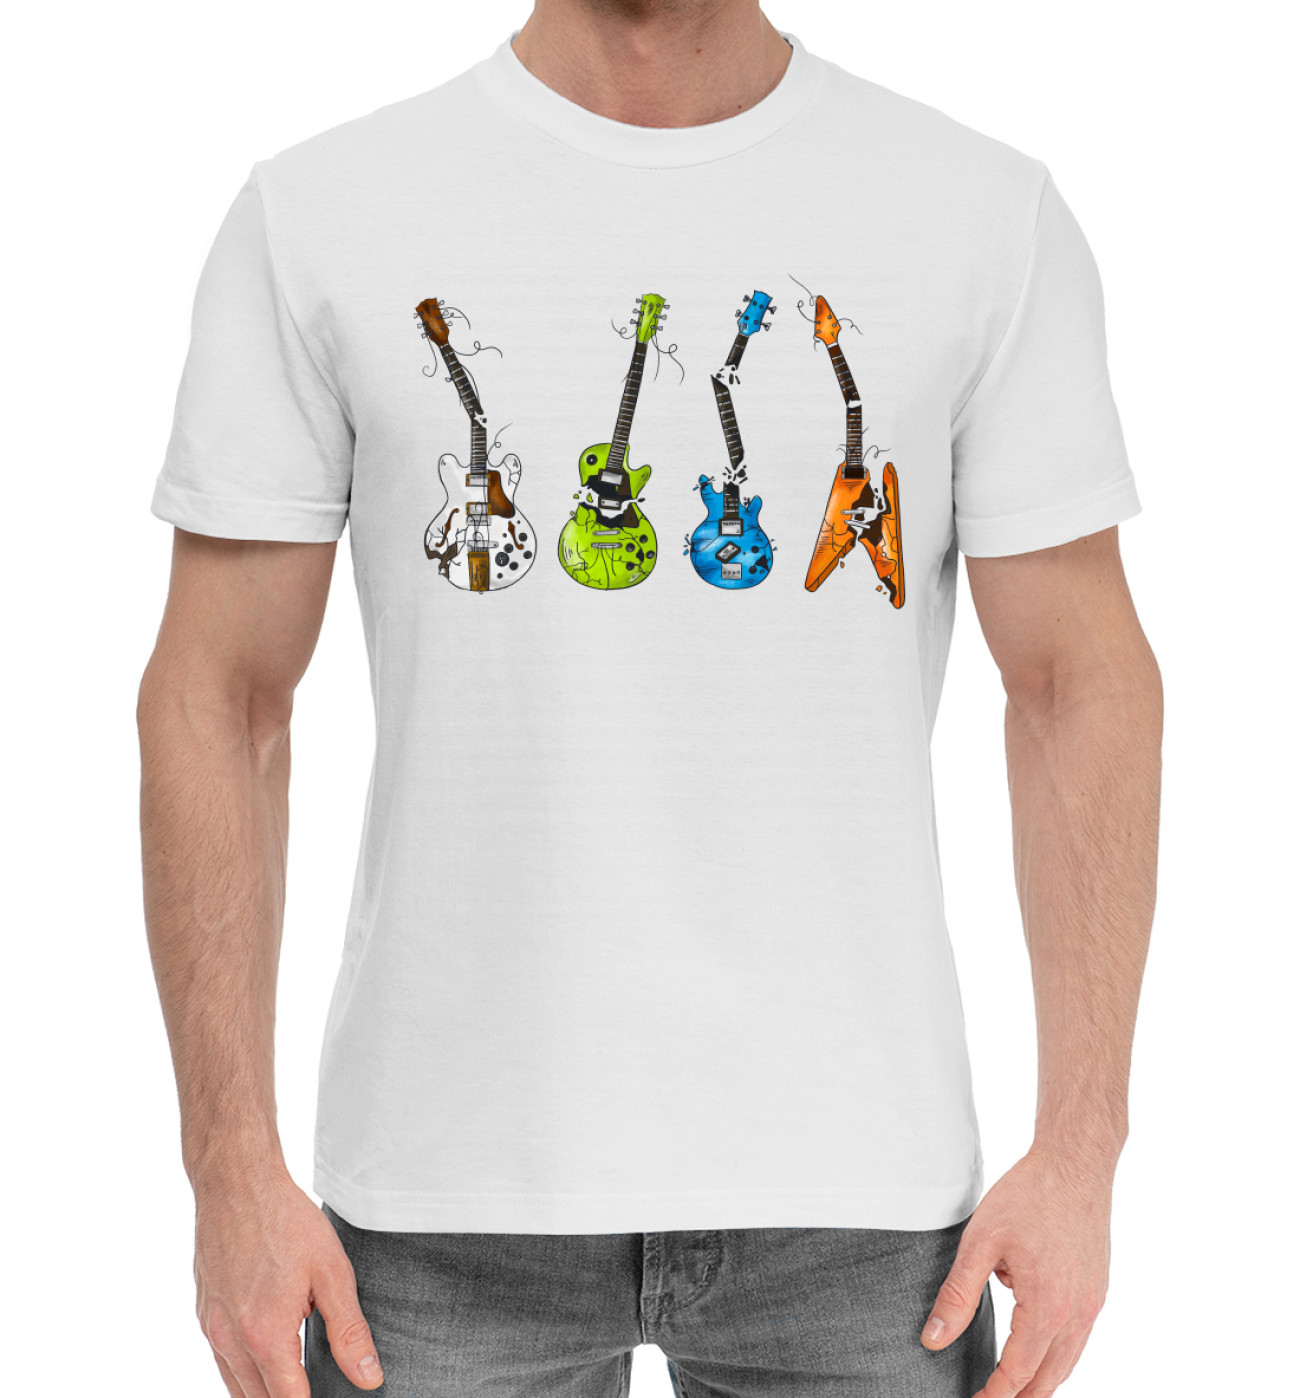 Мужская Хлопковая футболка Гитары, артикул: MZK-889010-hfu-2